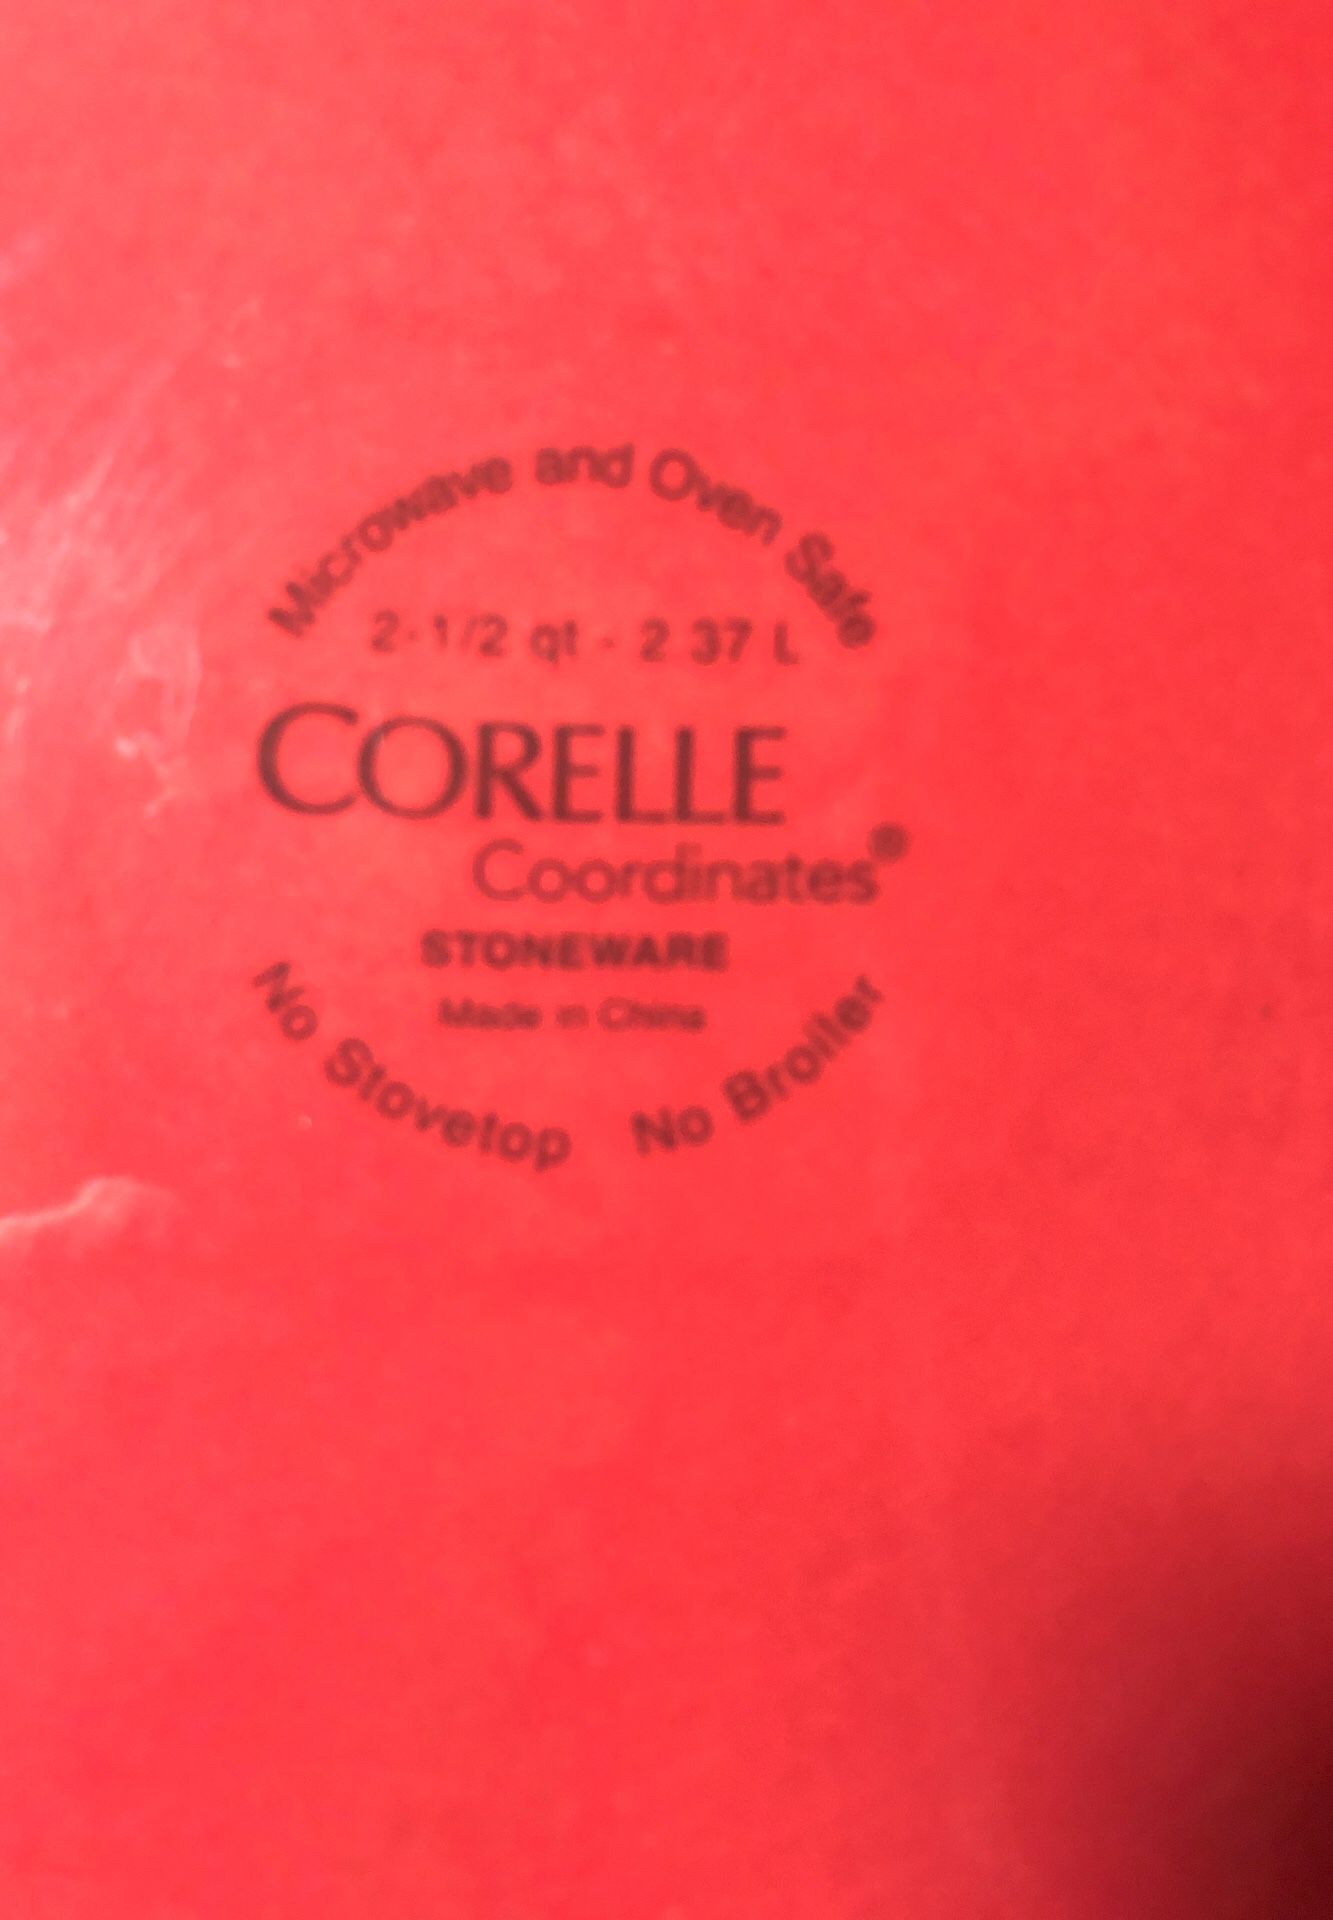 Corelle Coordinates and Corning Ware Bakeware